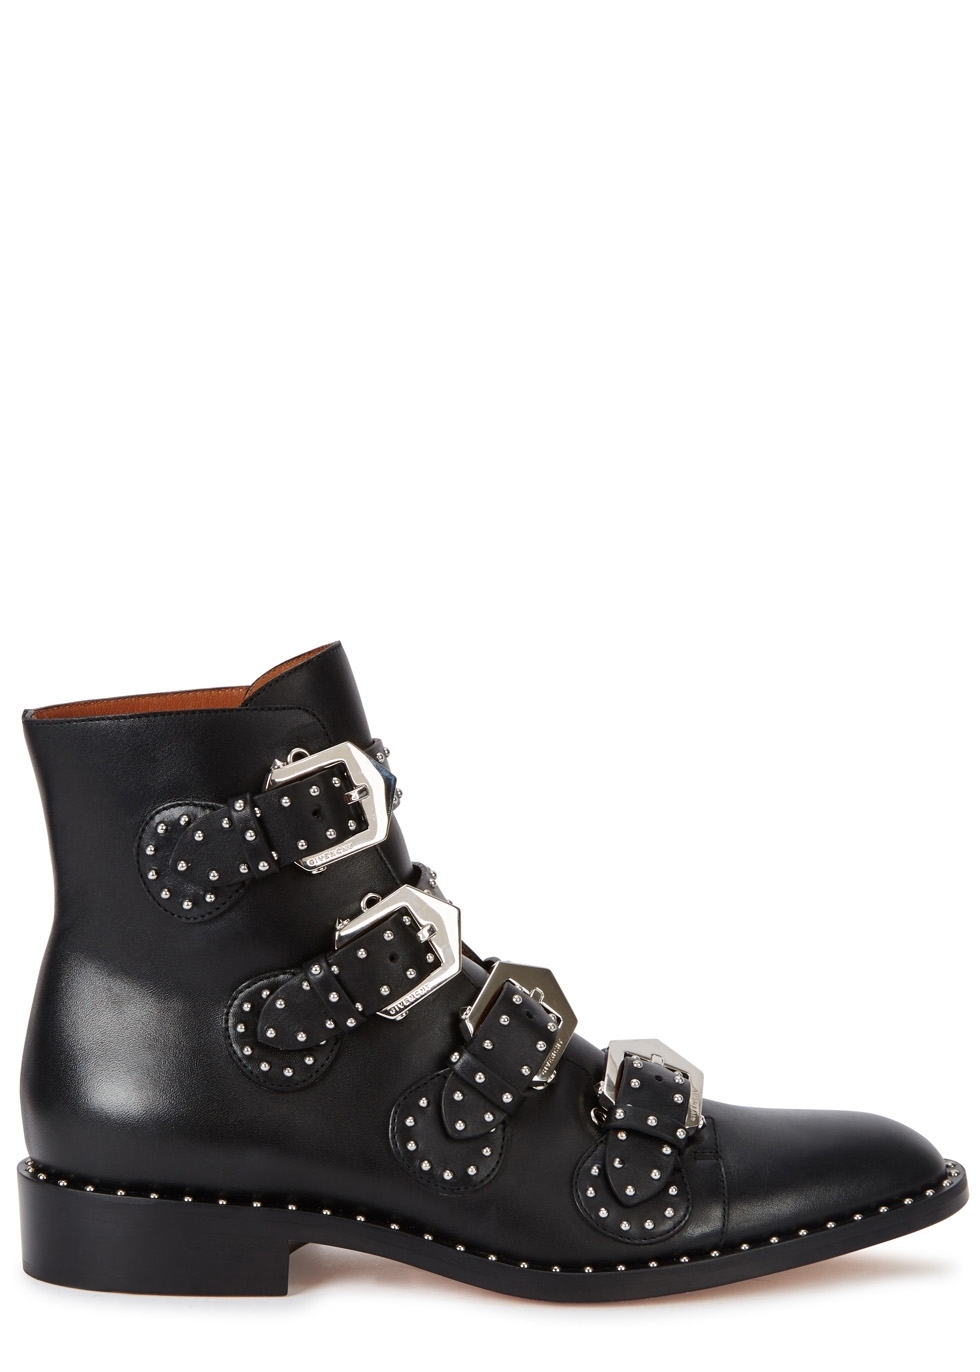 Givenchy Elegant black studded leather boots - Harvey Nichols